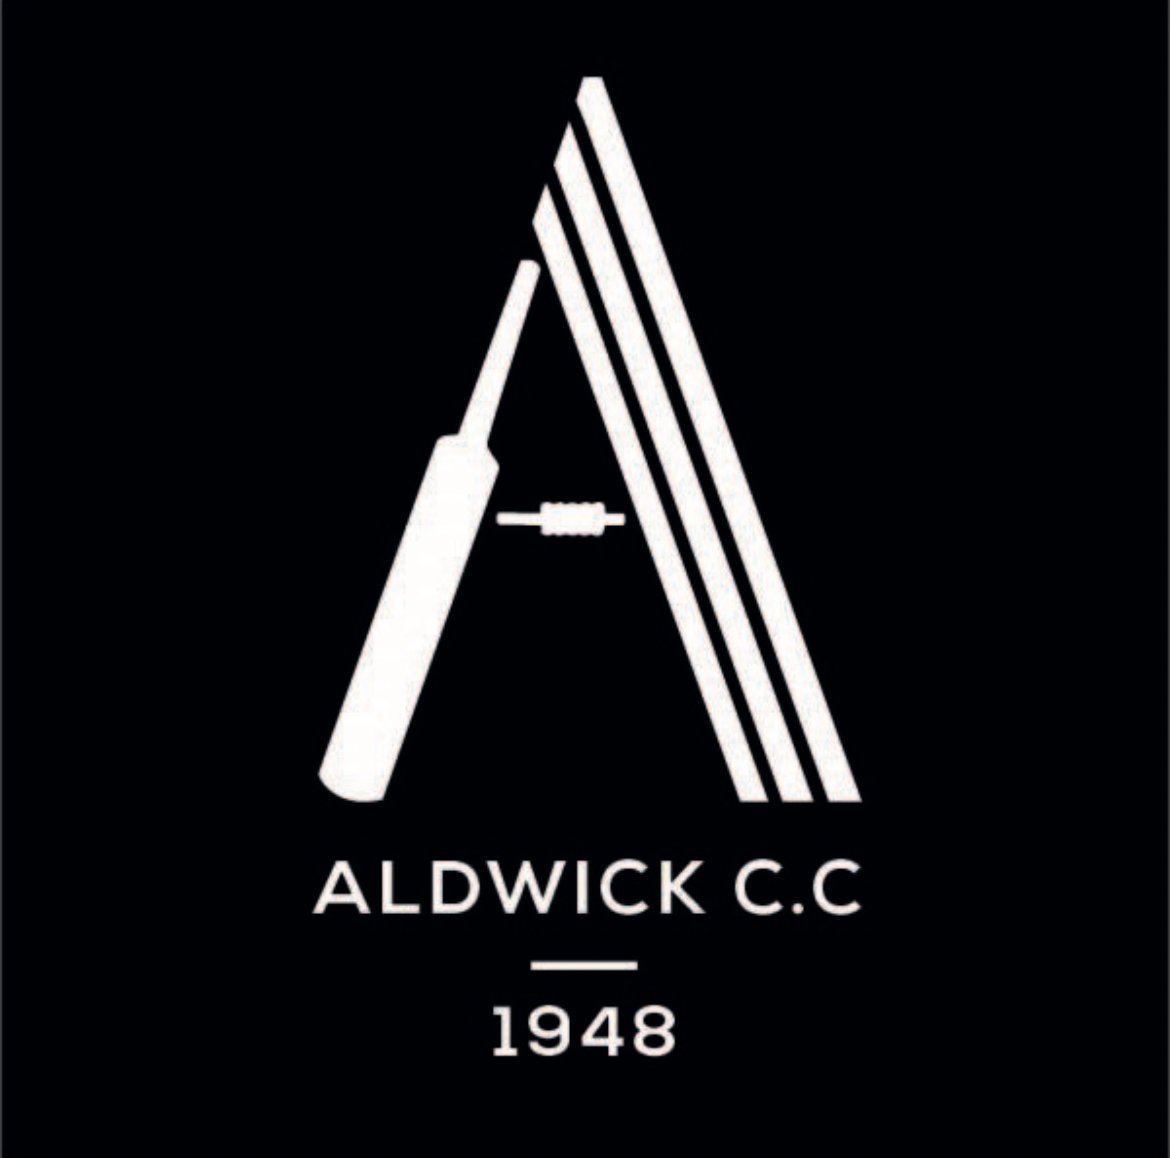 Aldwick Cricket Club logo